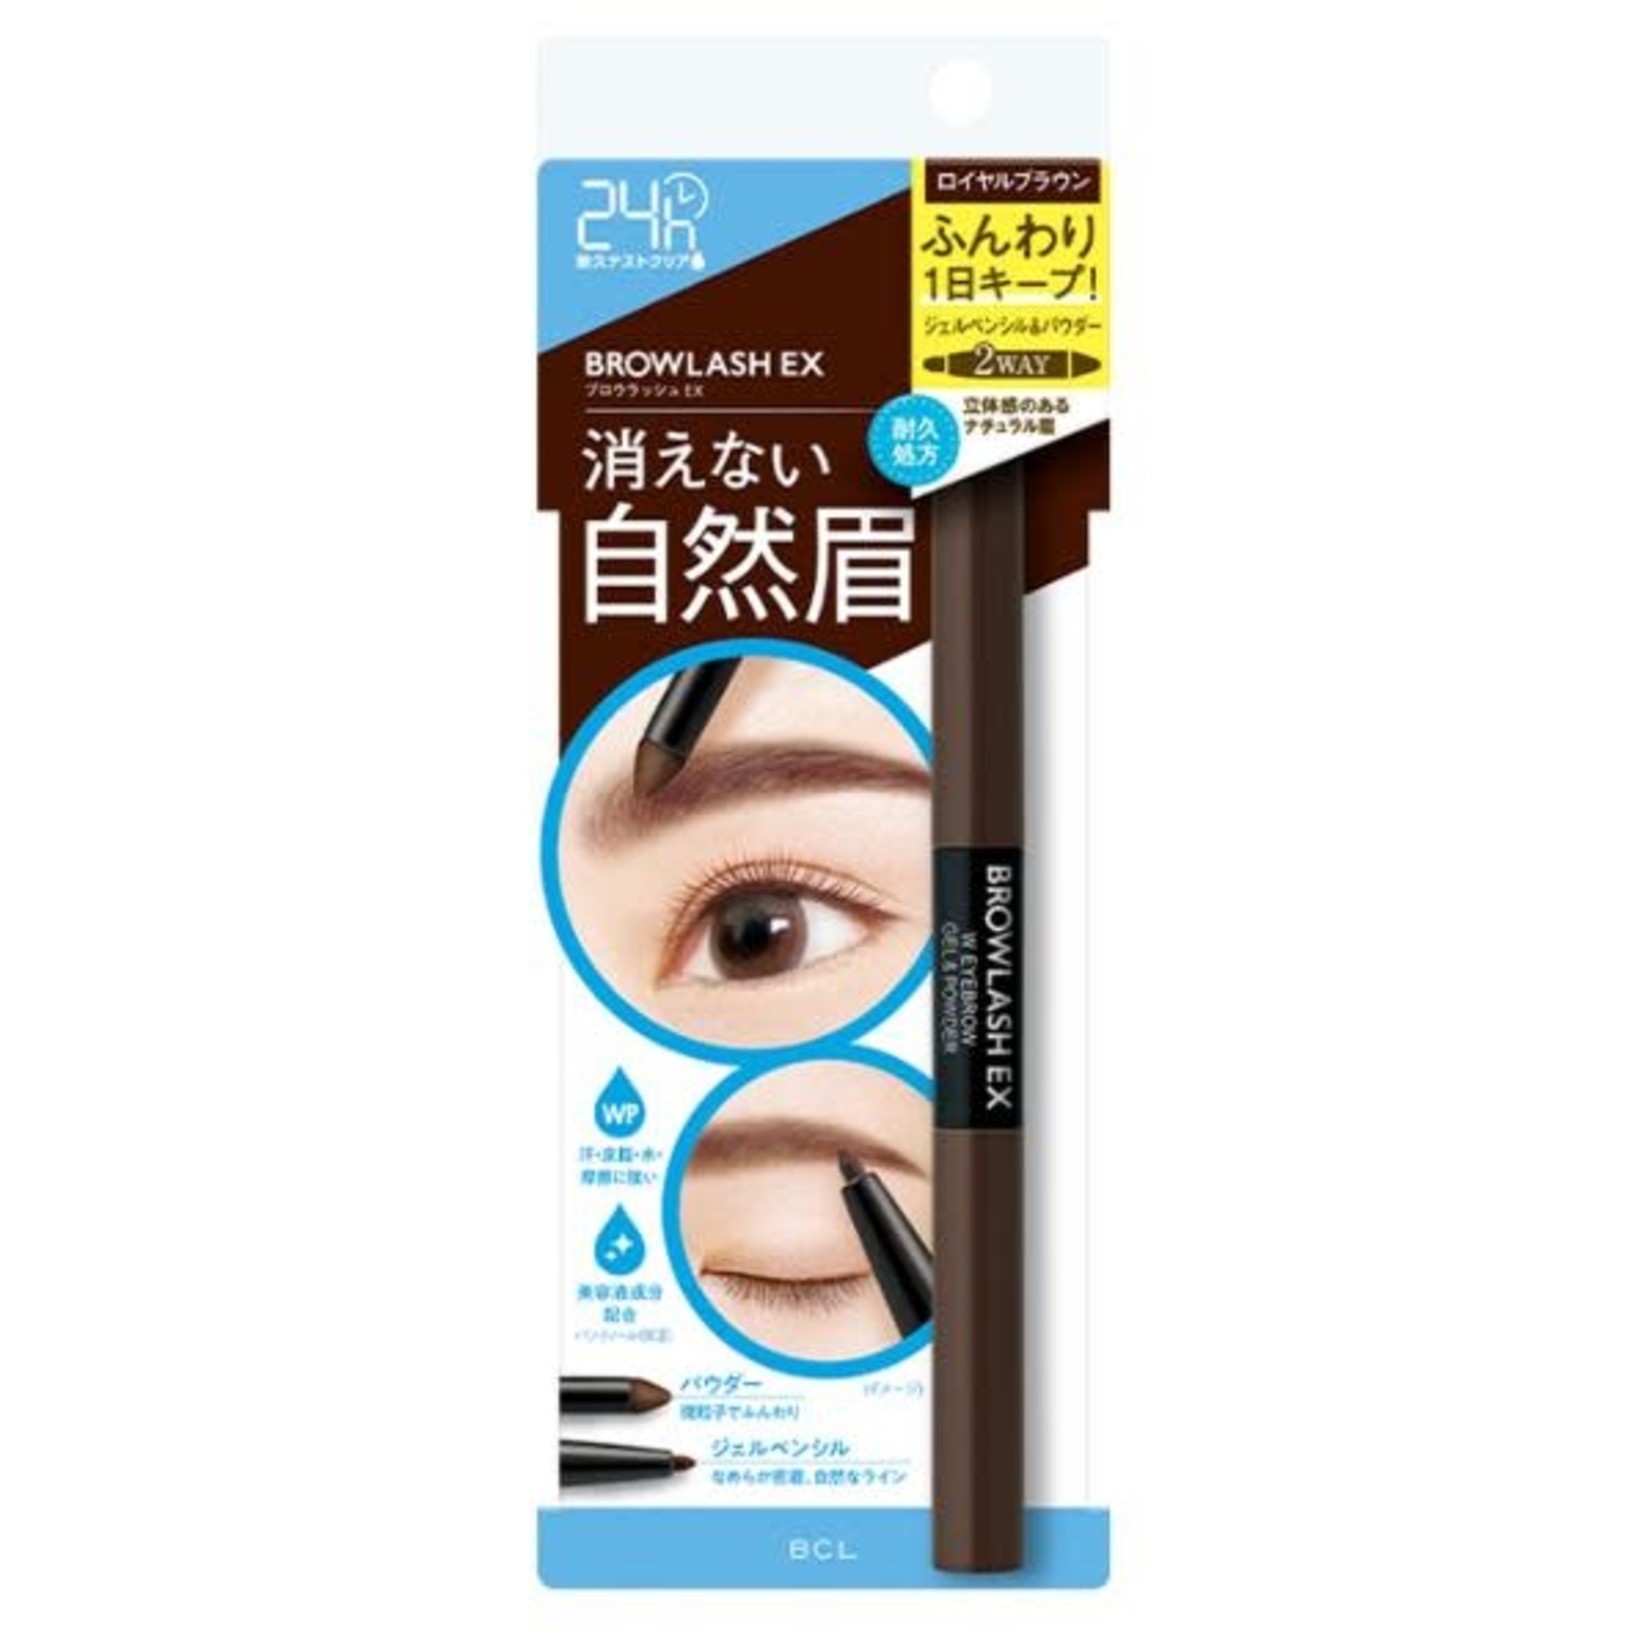 BCL Browlash BCL Browlash EX Water Strong Gel Pencil+Powder  W/ Eyebrow RB